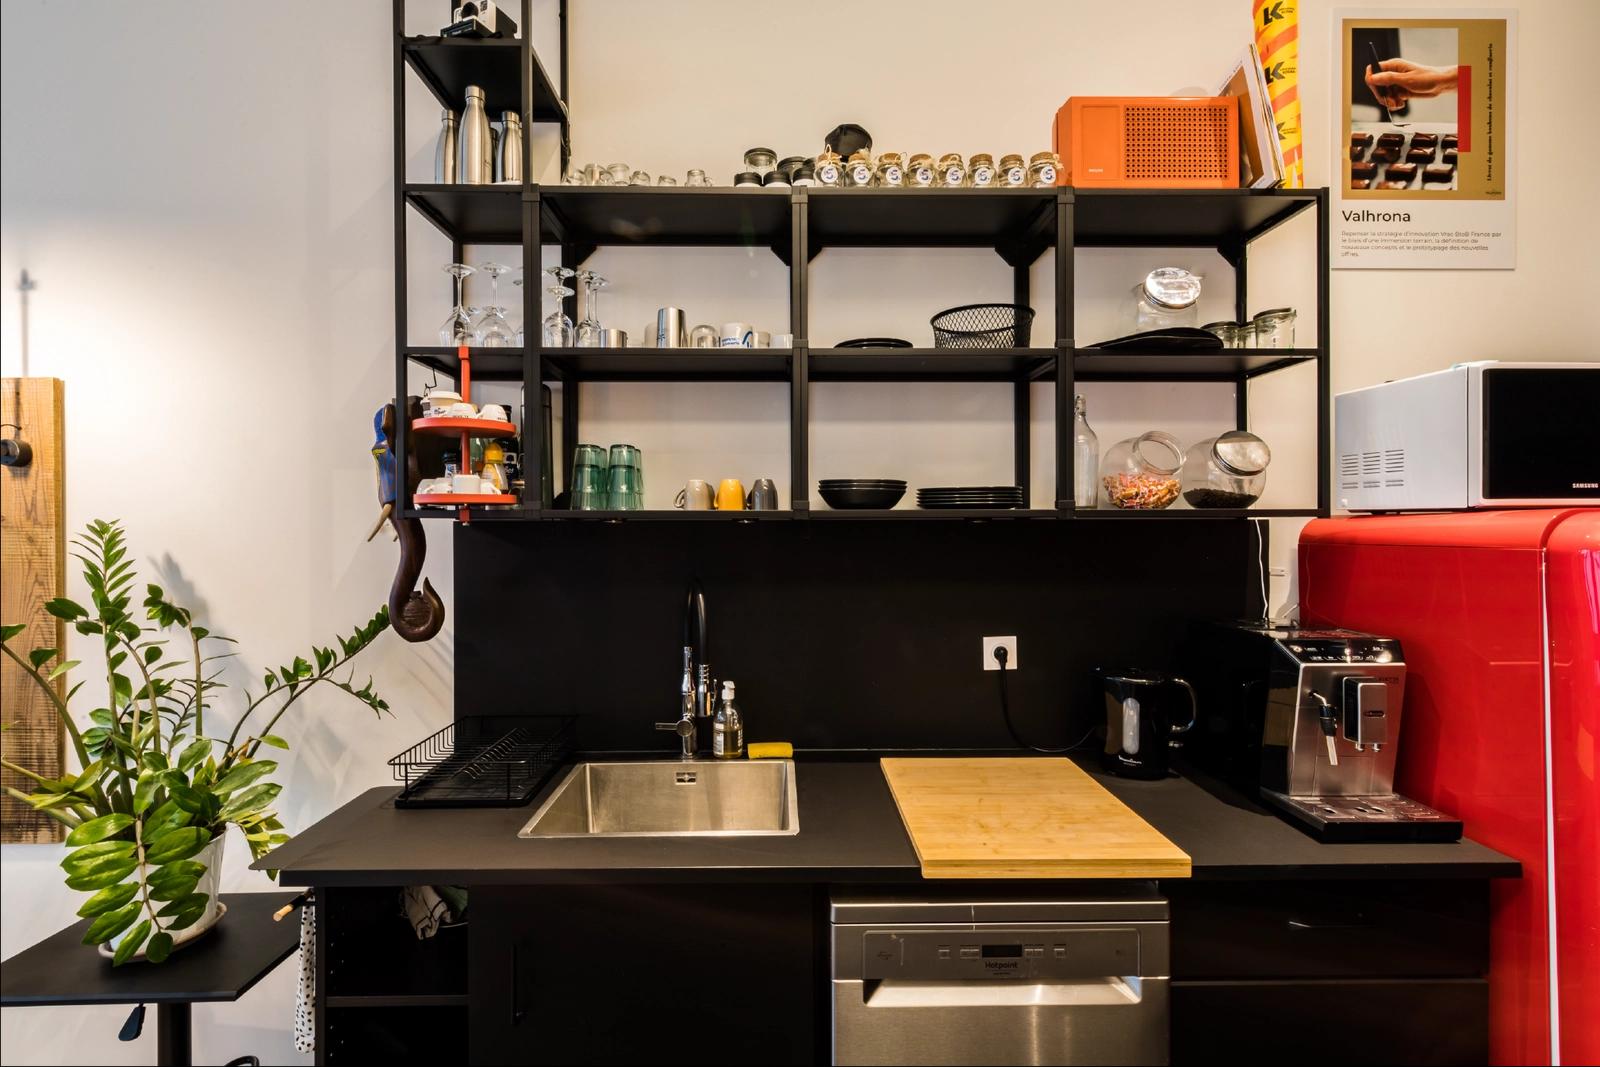 Kitchen in Creative, modular space - 5